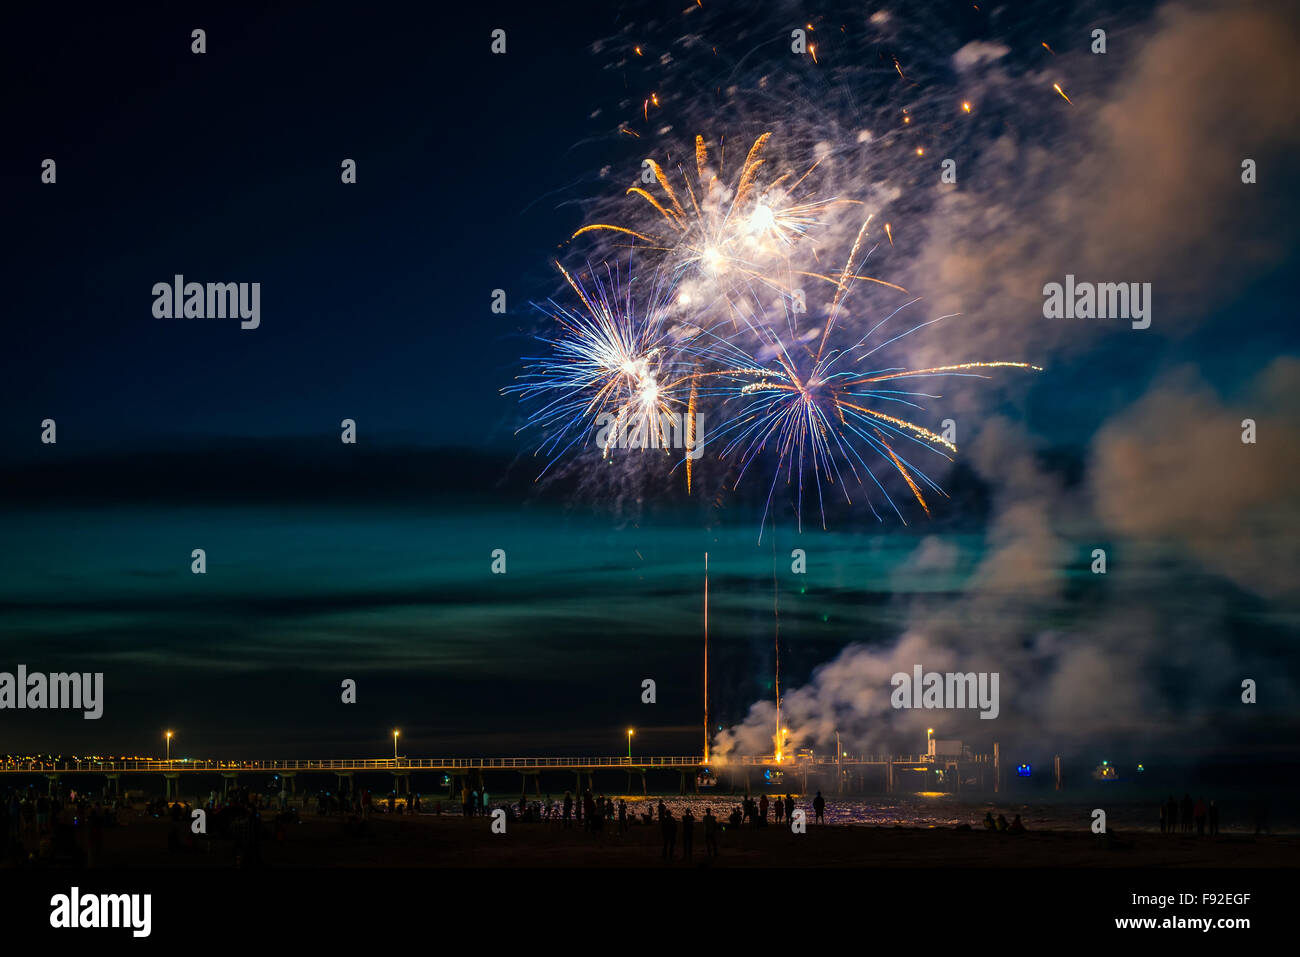 New Year Fireworks display at Glenelg beach, South Australia Stock Photo